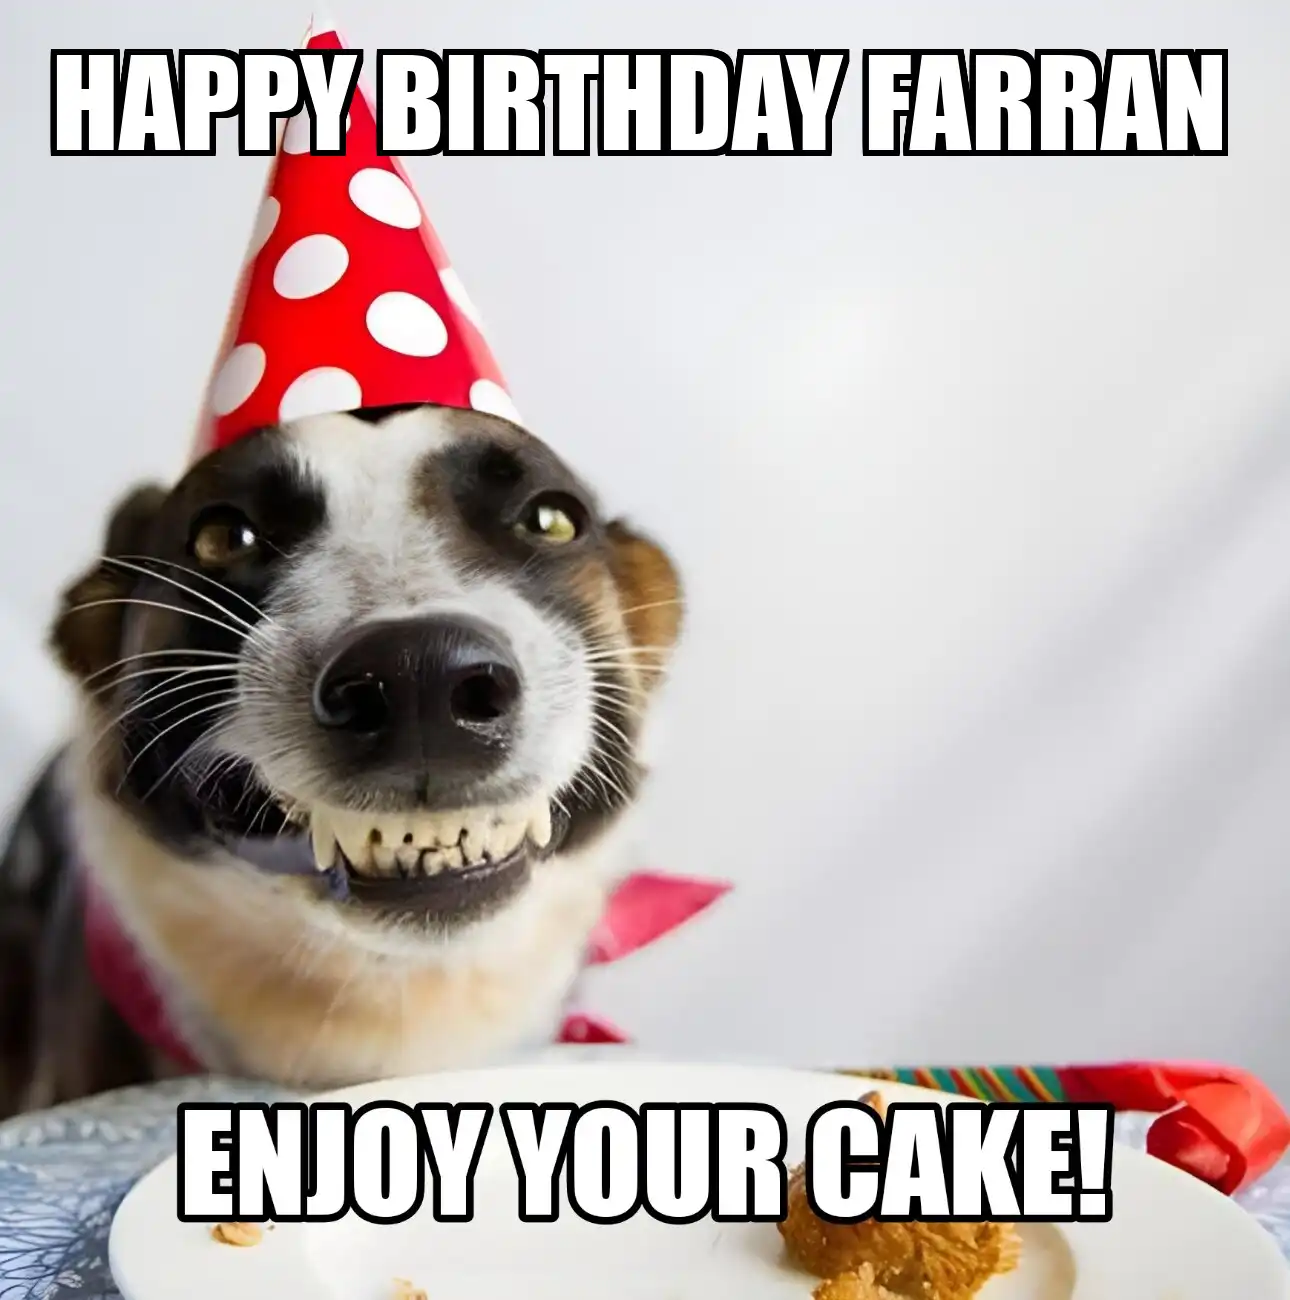 Happy Birthday Farran Enjoy Your Cake Dog Meme